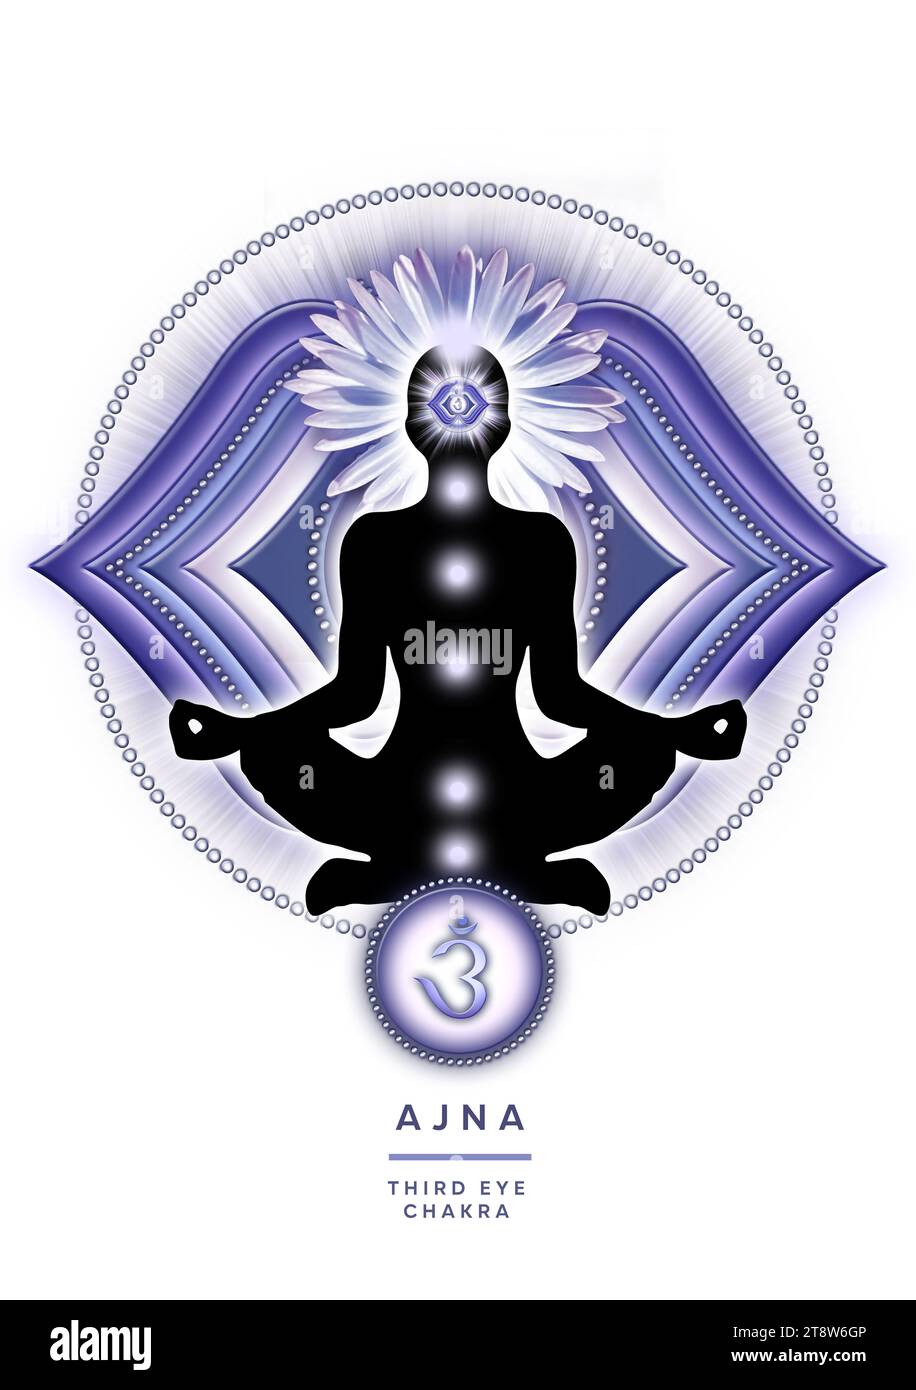 Seven Chakras Of The Human Body & Asanas To Unblock Them | Femina.in